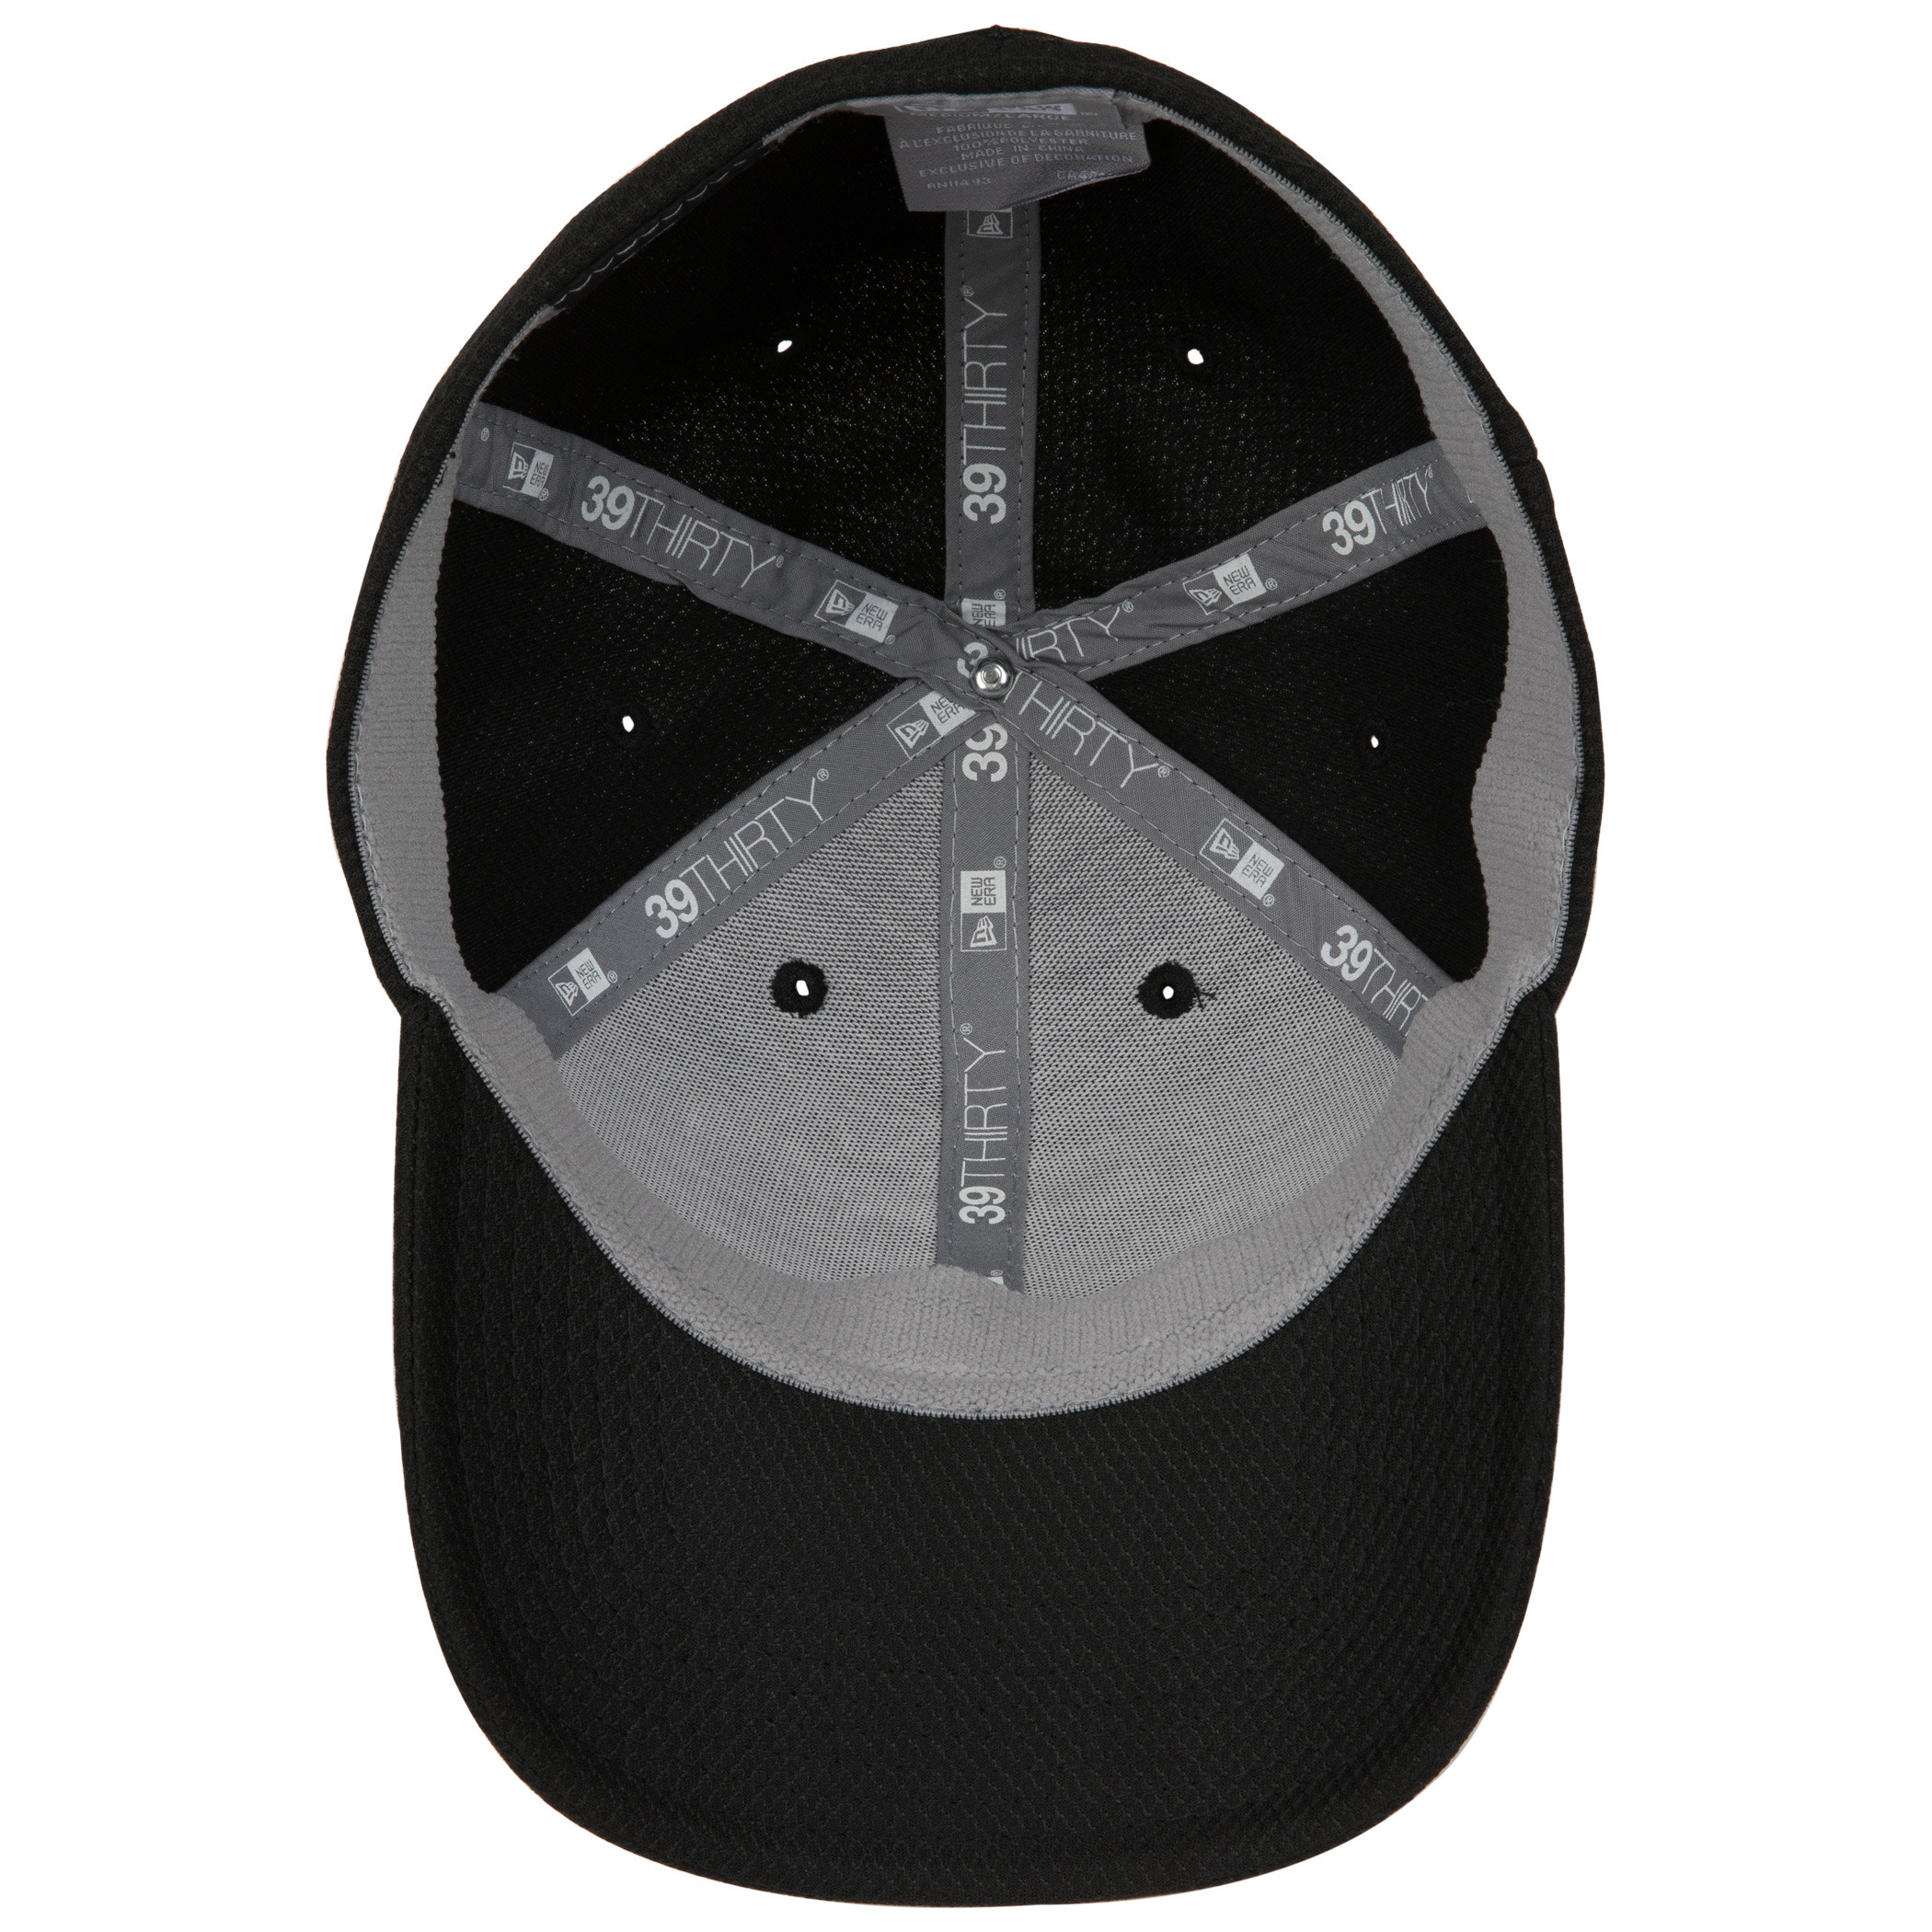 Batman Symbol Black on Black New Era 39Thirty Fitted Hat